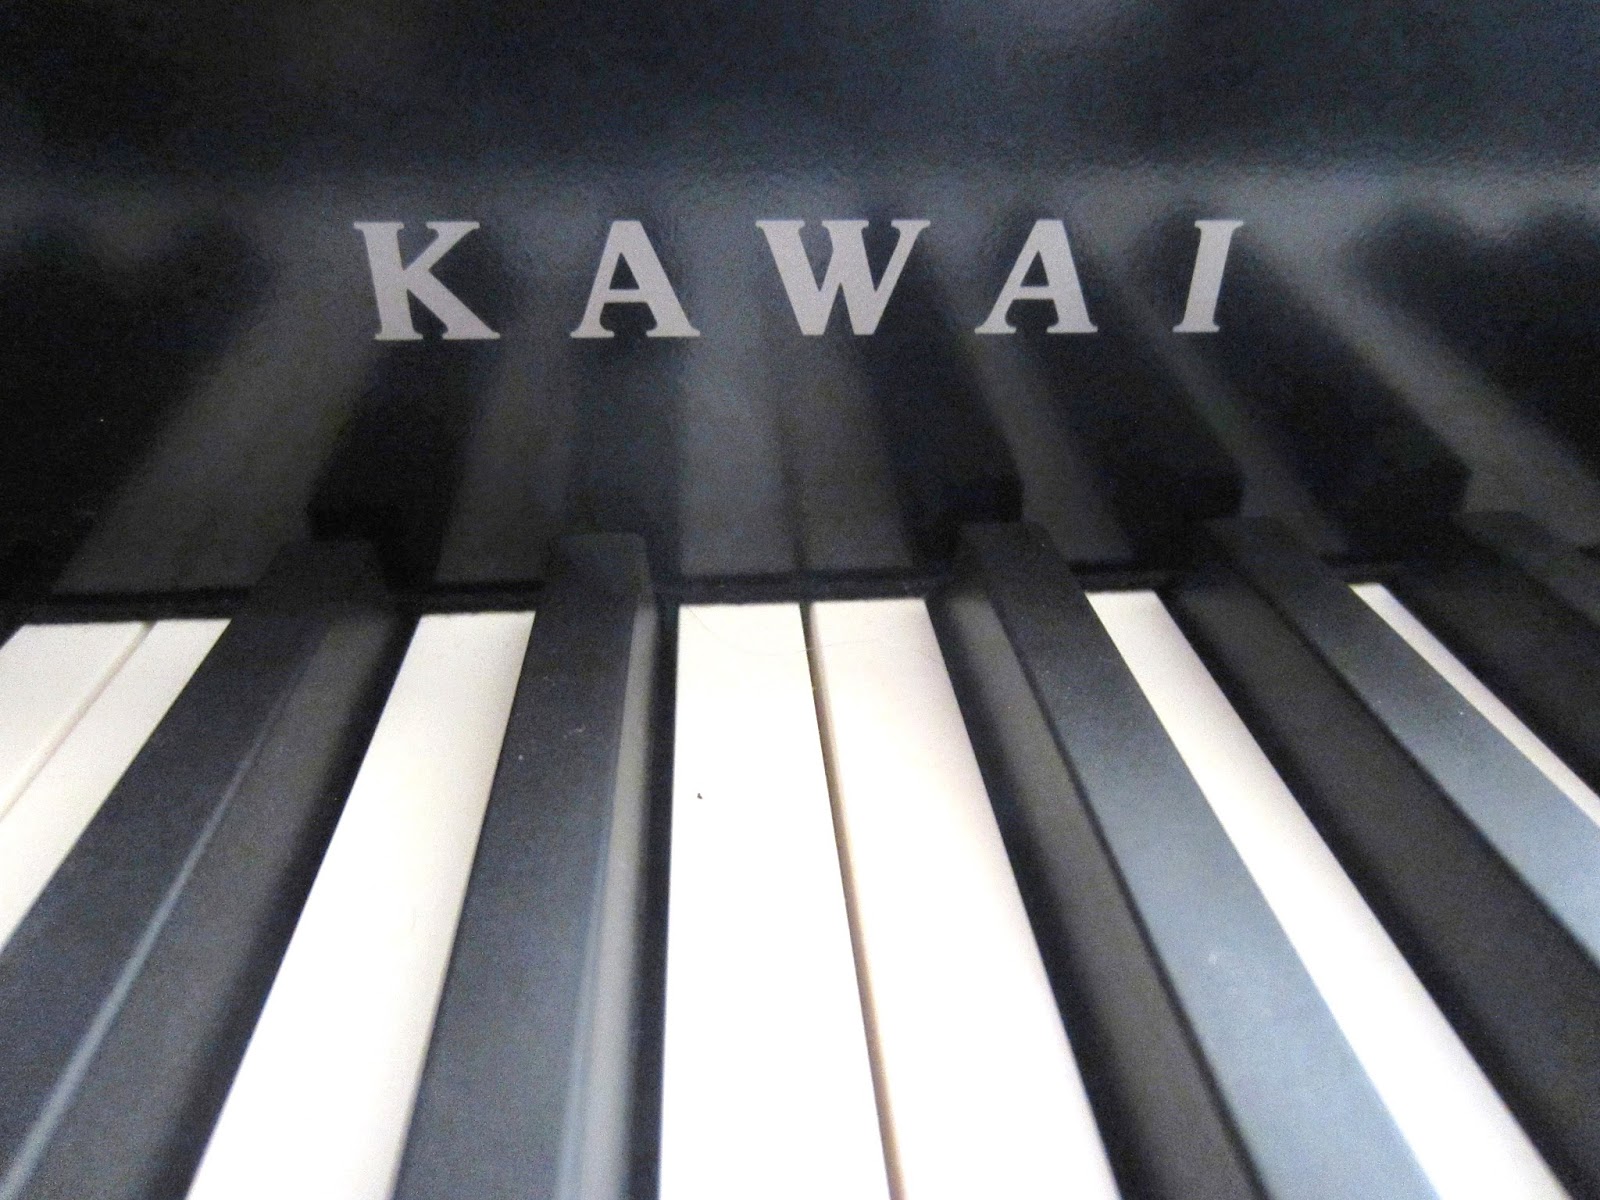 Kawai MP11 digital piano